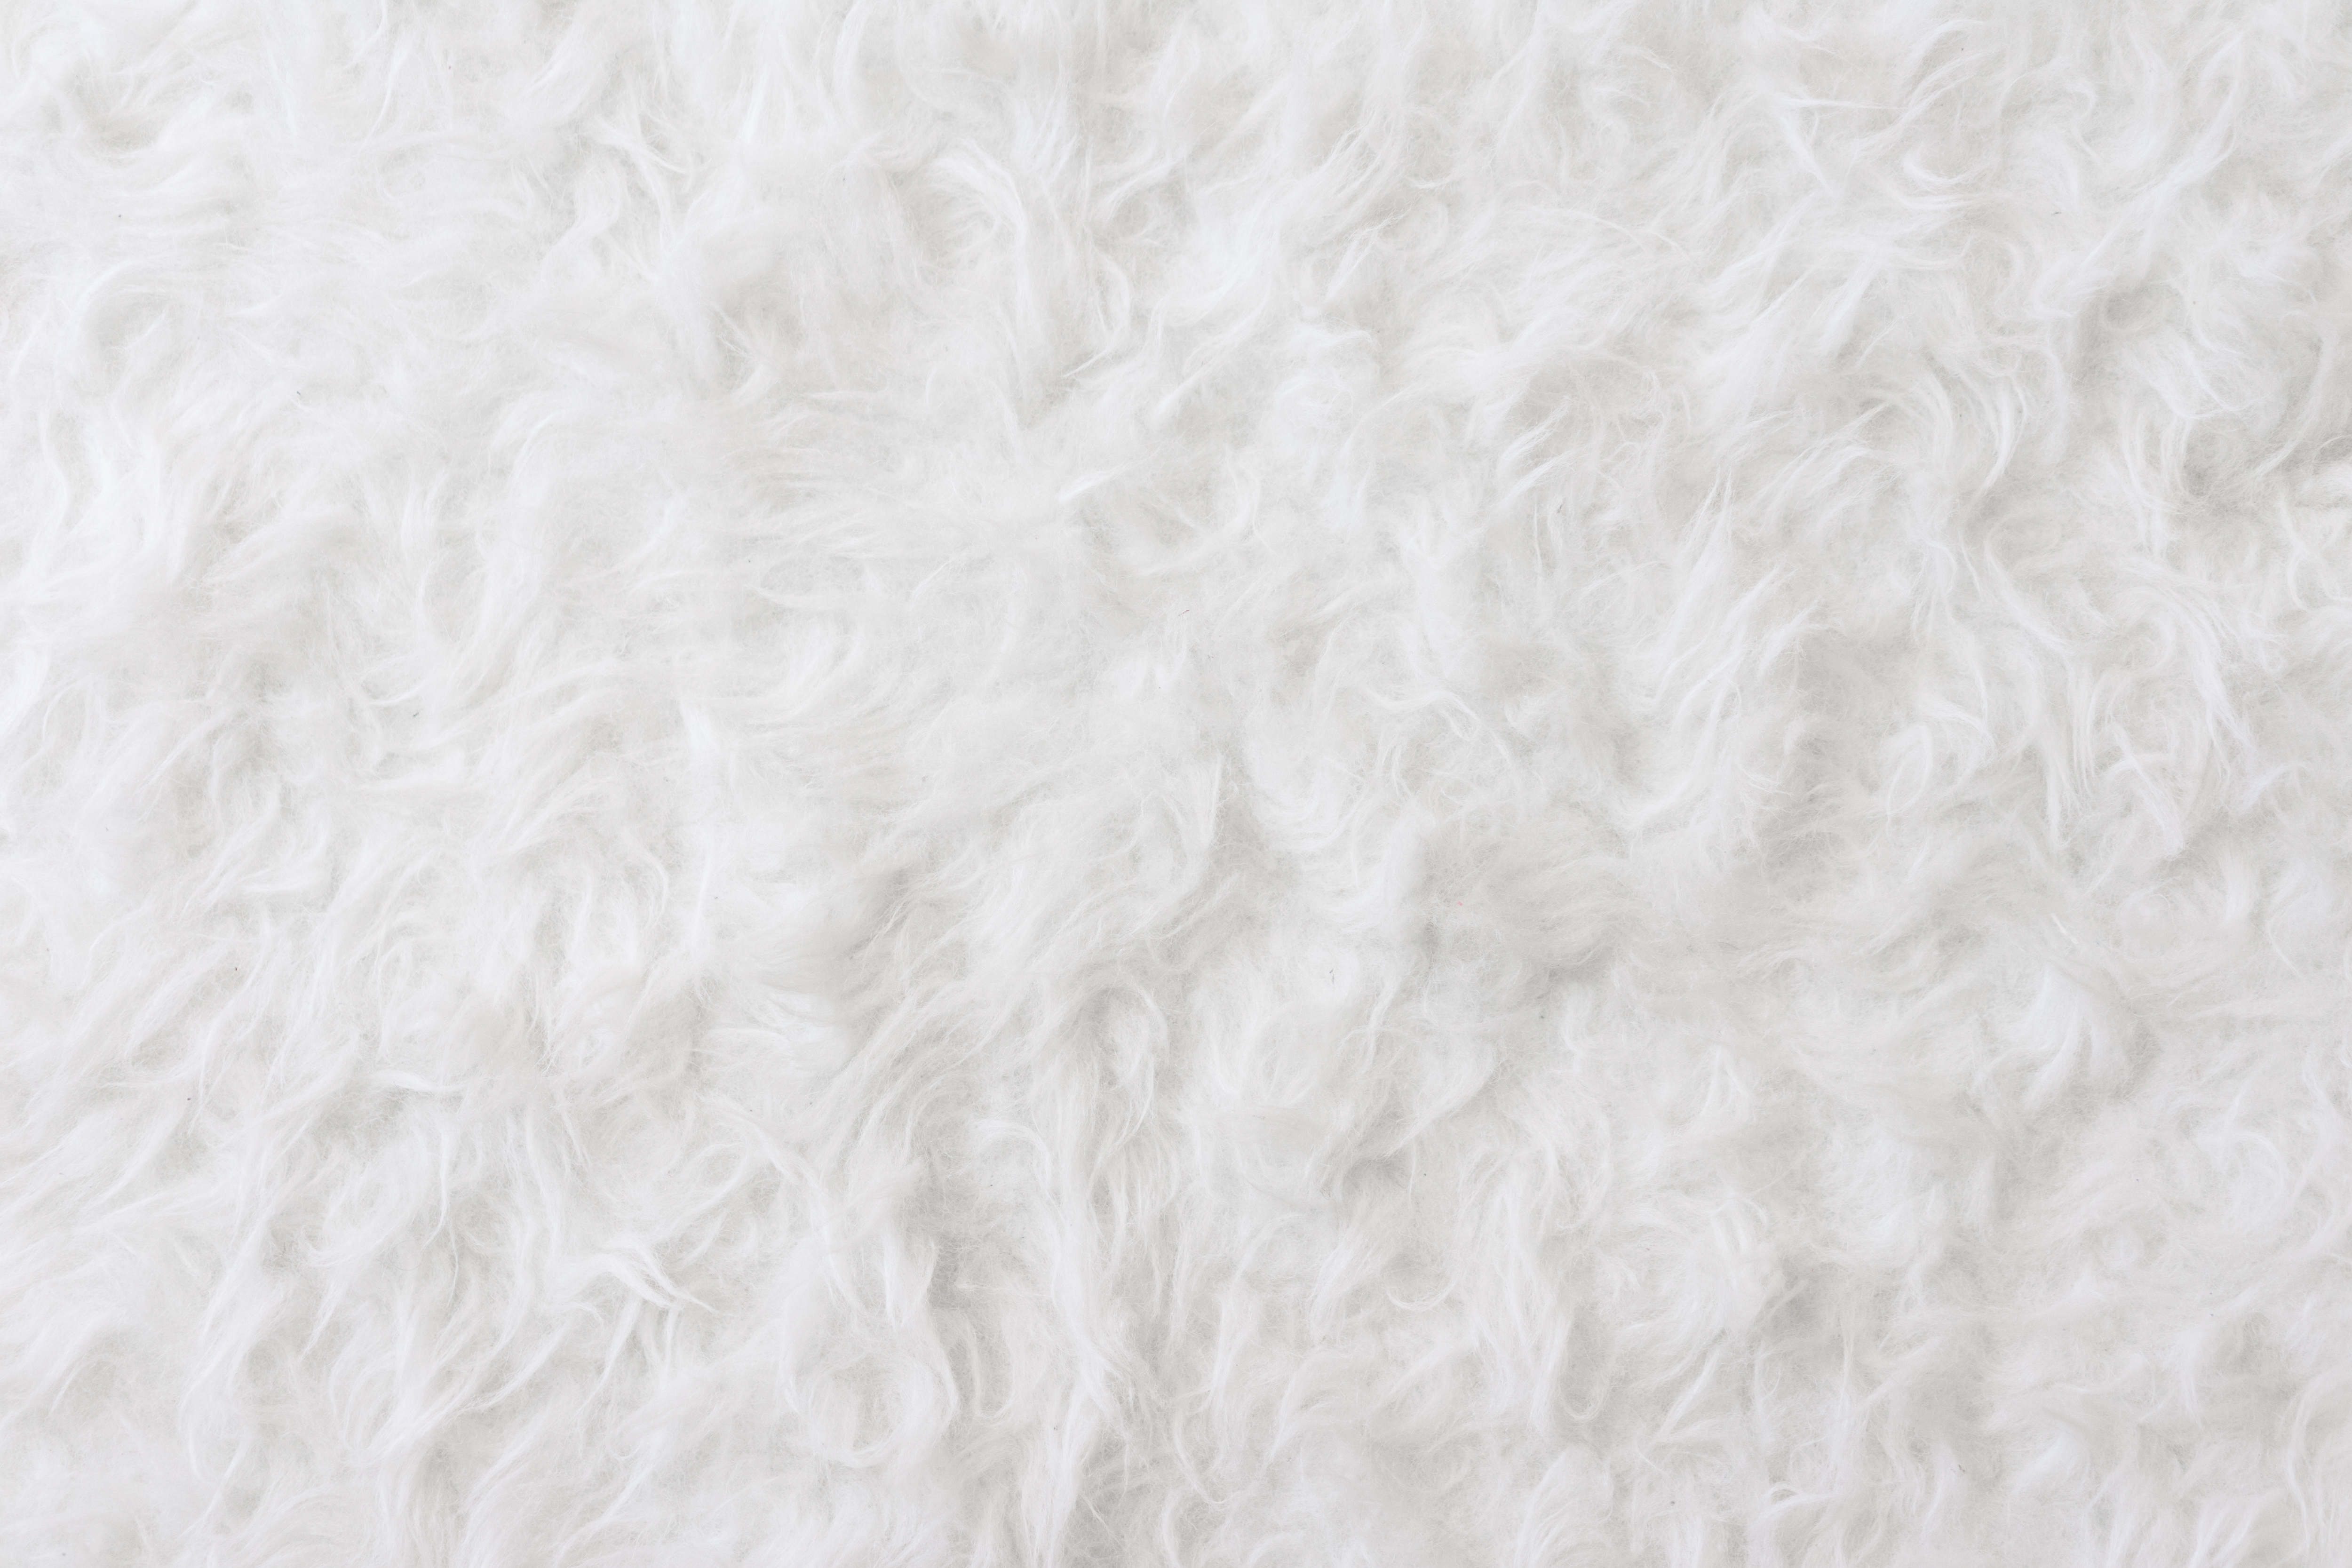 White Eco Fur Pattern Background Free Stock Photo | picjumbo